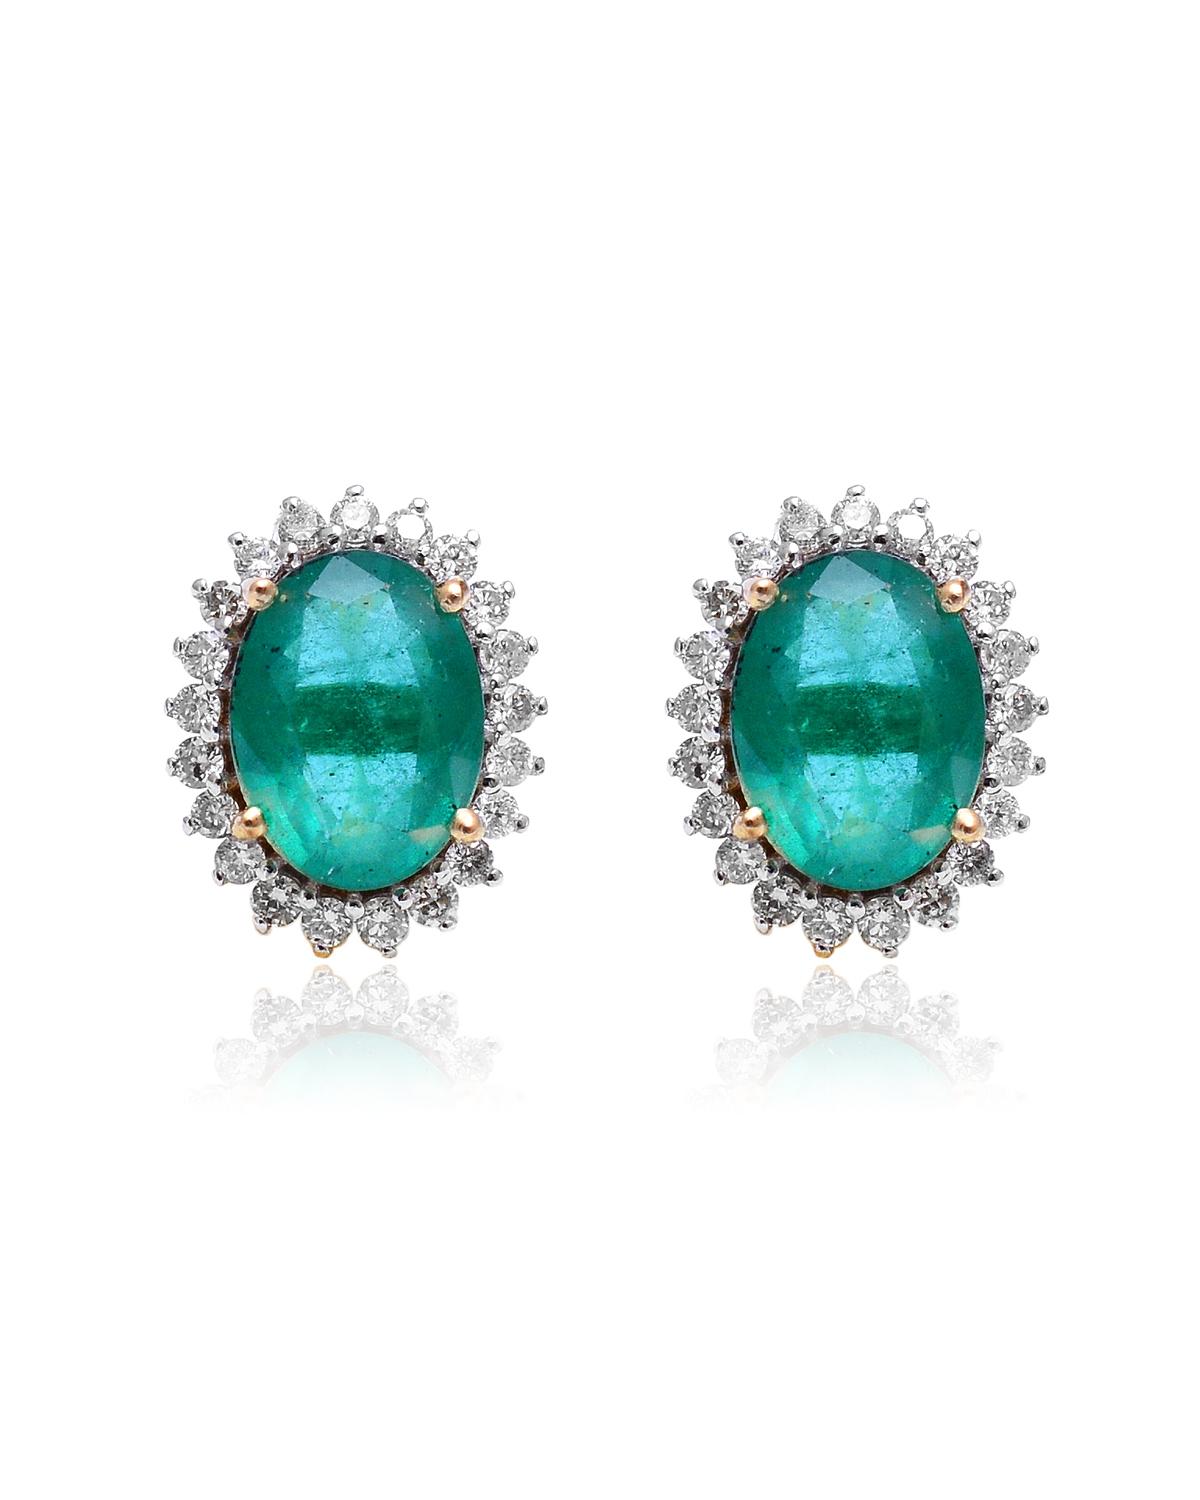 Brilliant Cut Emerald Stud Earrings with Diamond in 18karat Gold For Sale